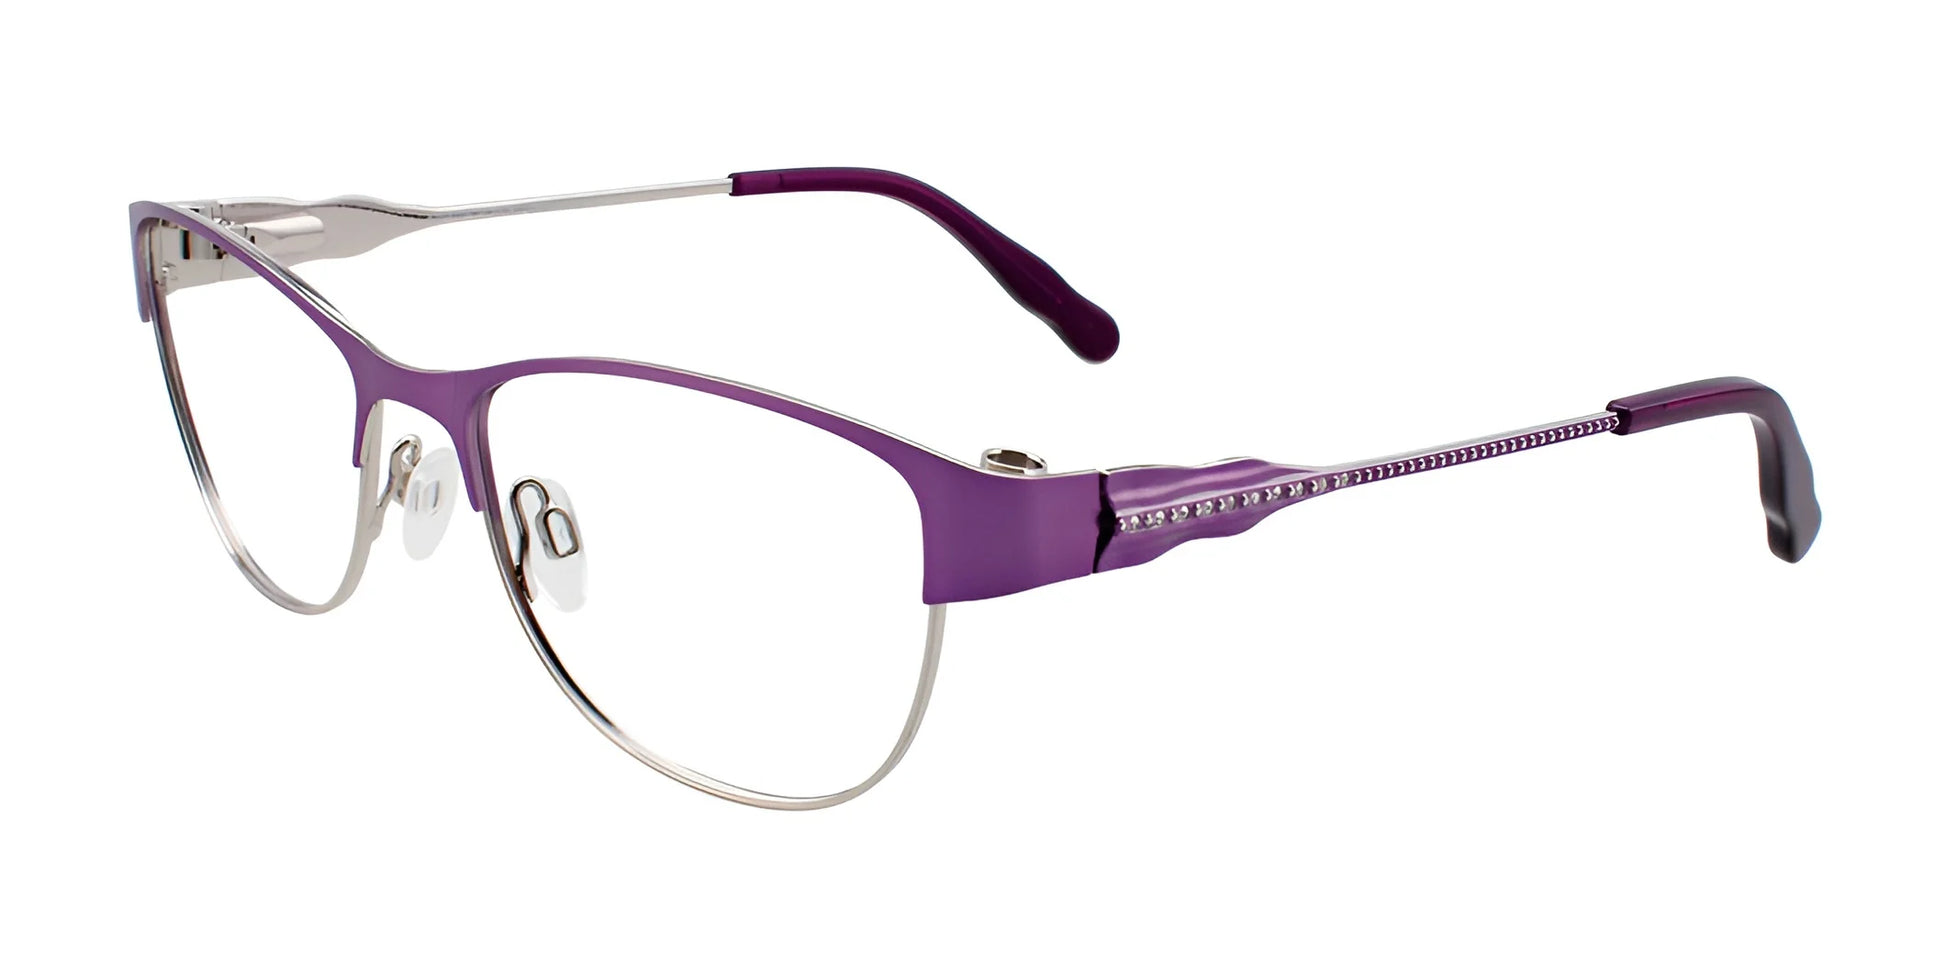 EasyClip EC405 Eyeglasses Satin Light Lavender & Shiny Silver / Kit 2 Clips